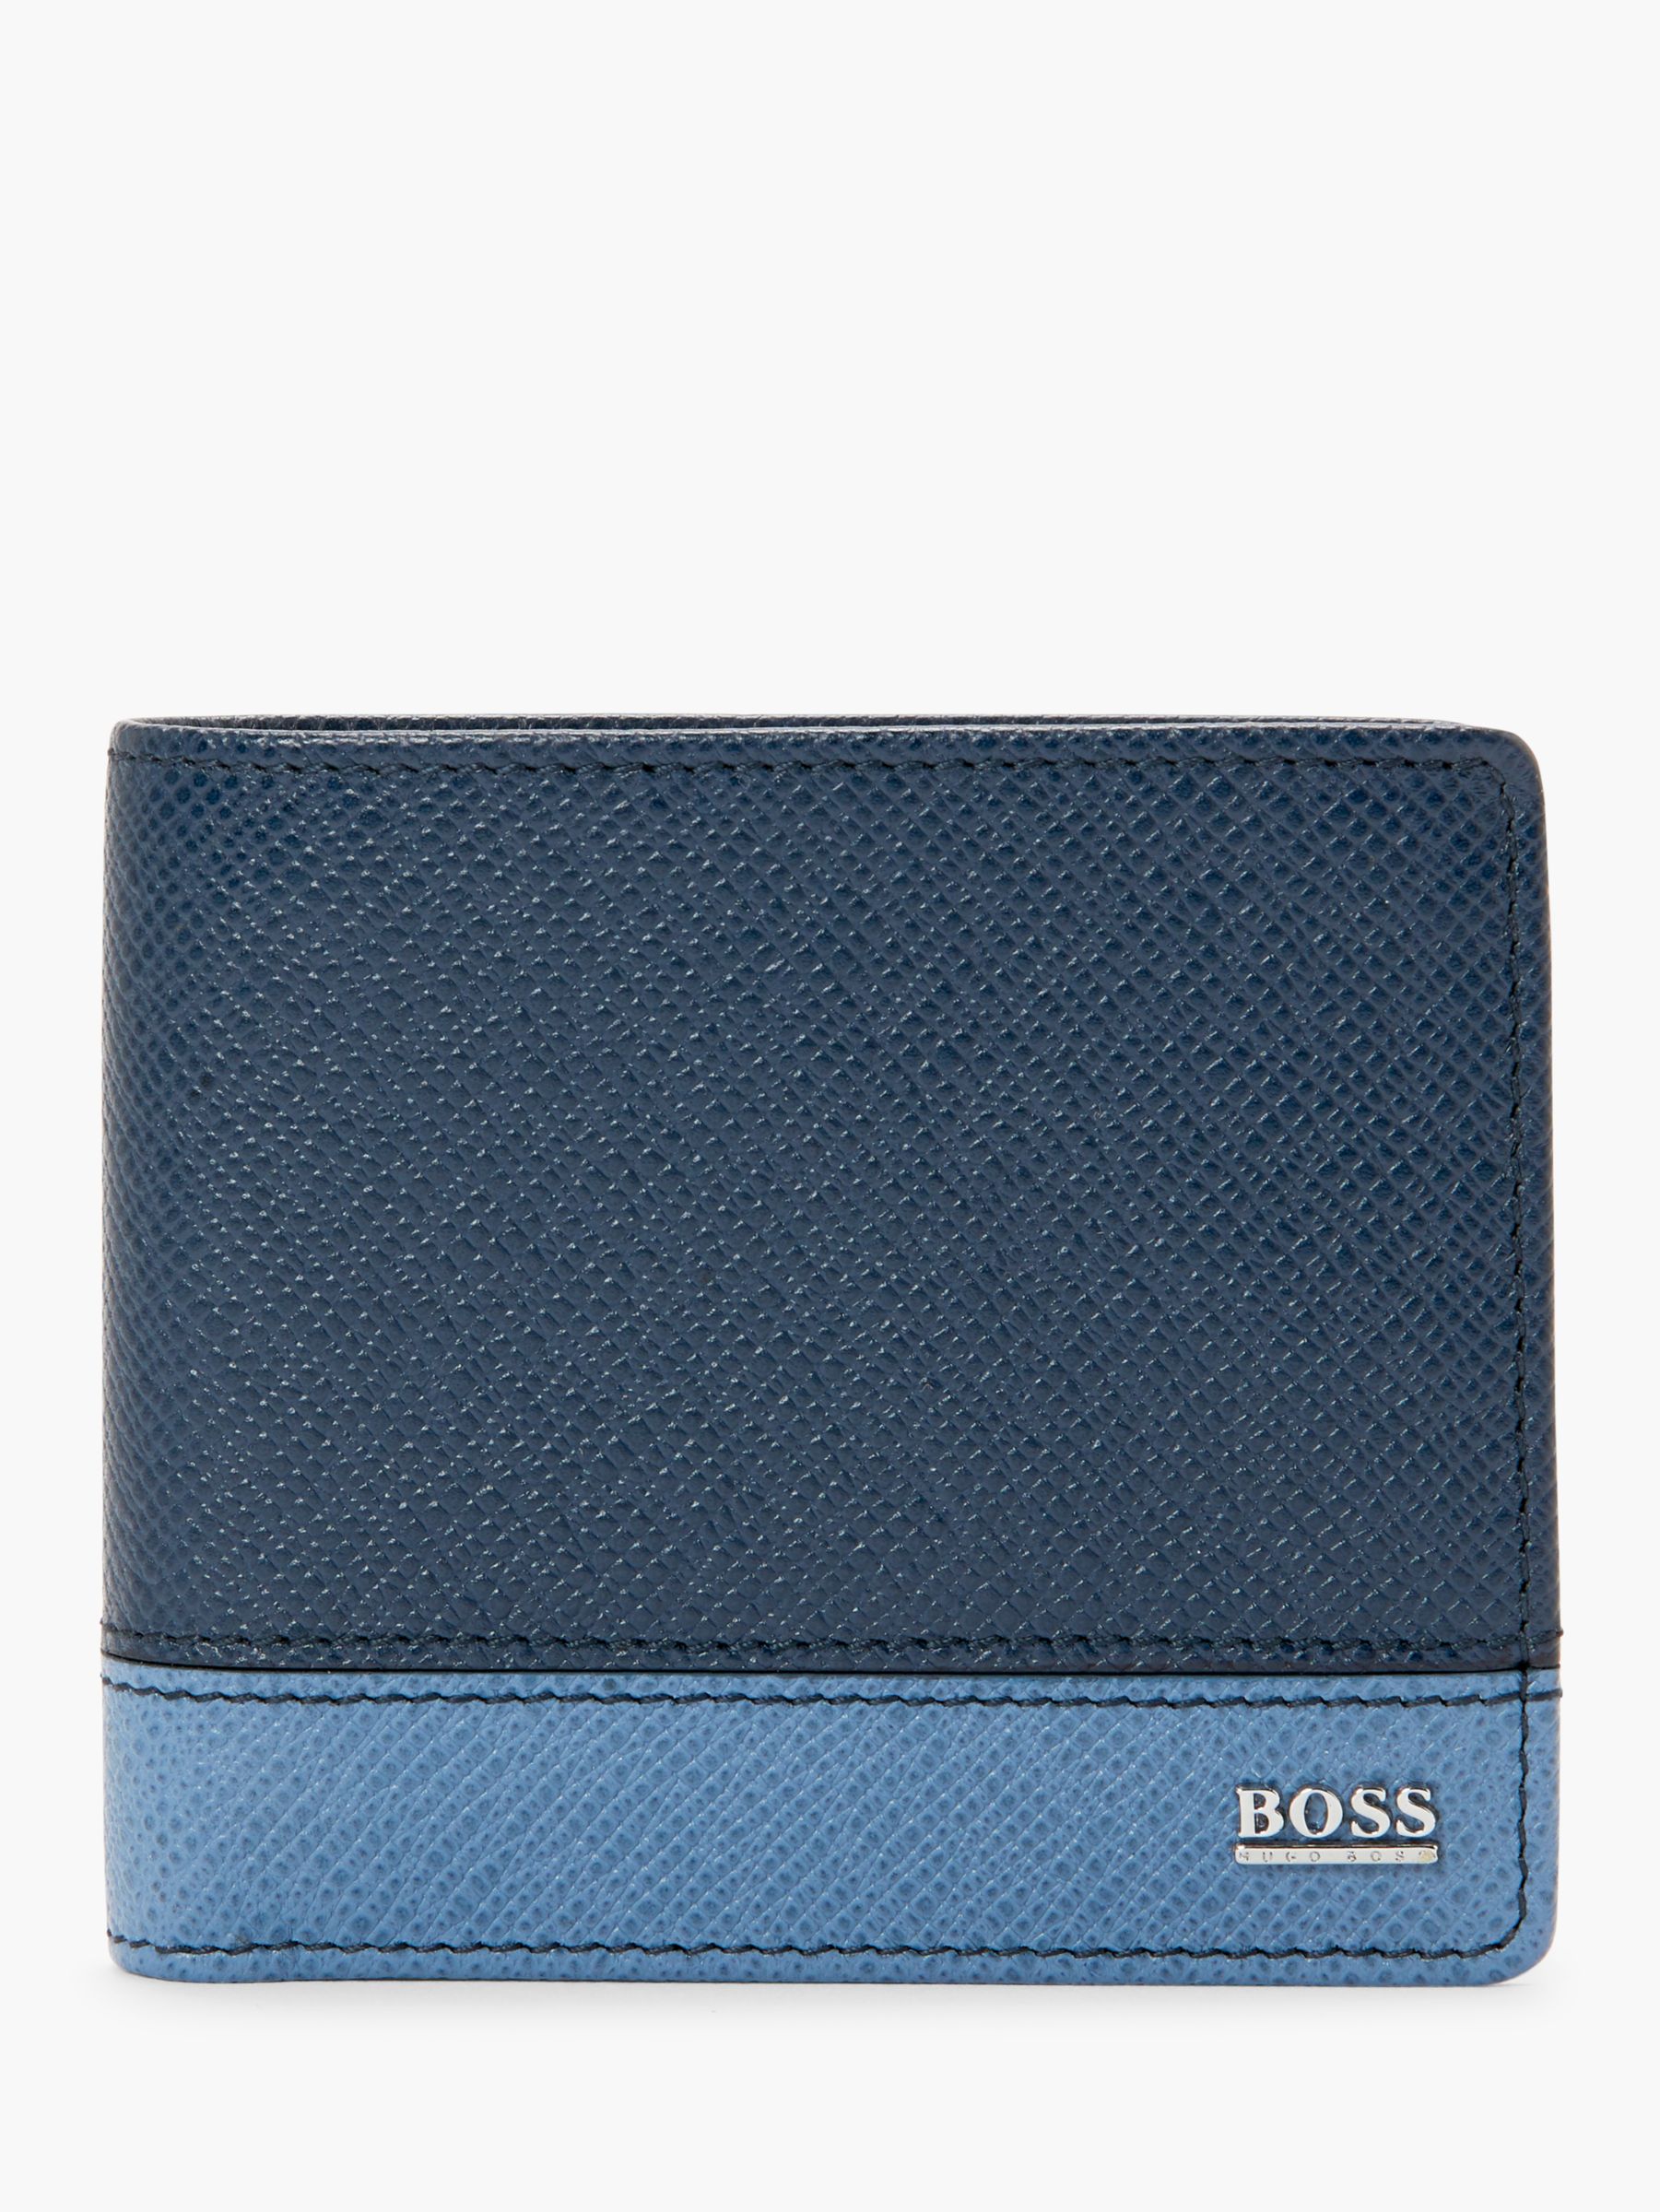 boss signature wallet